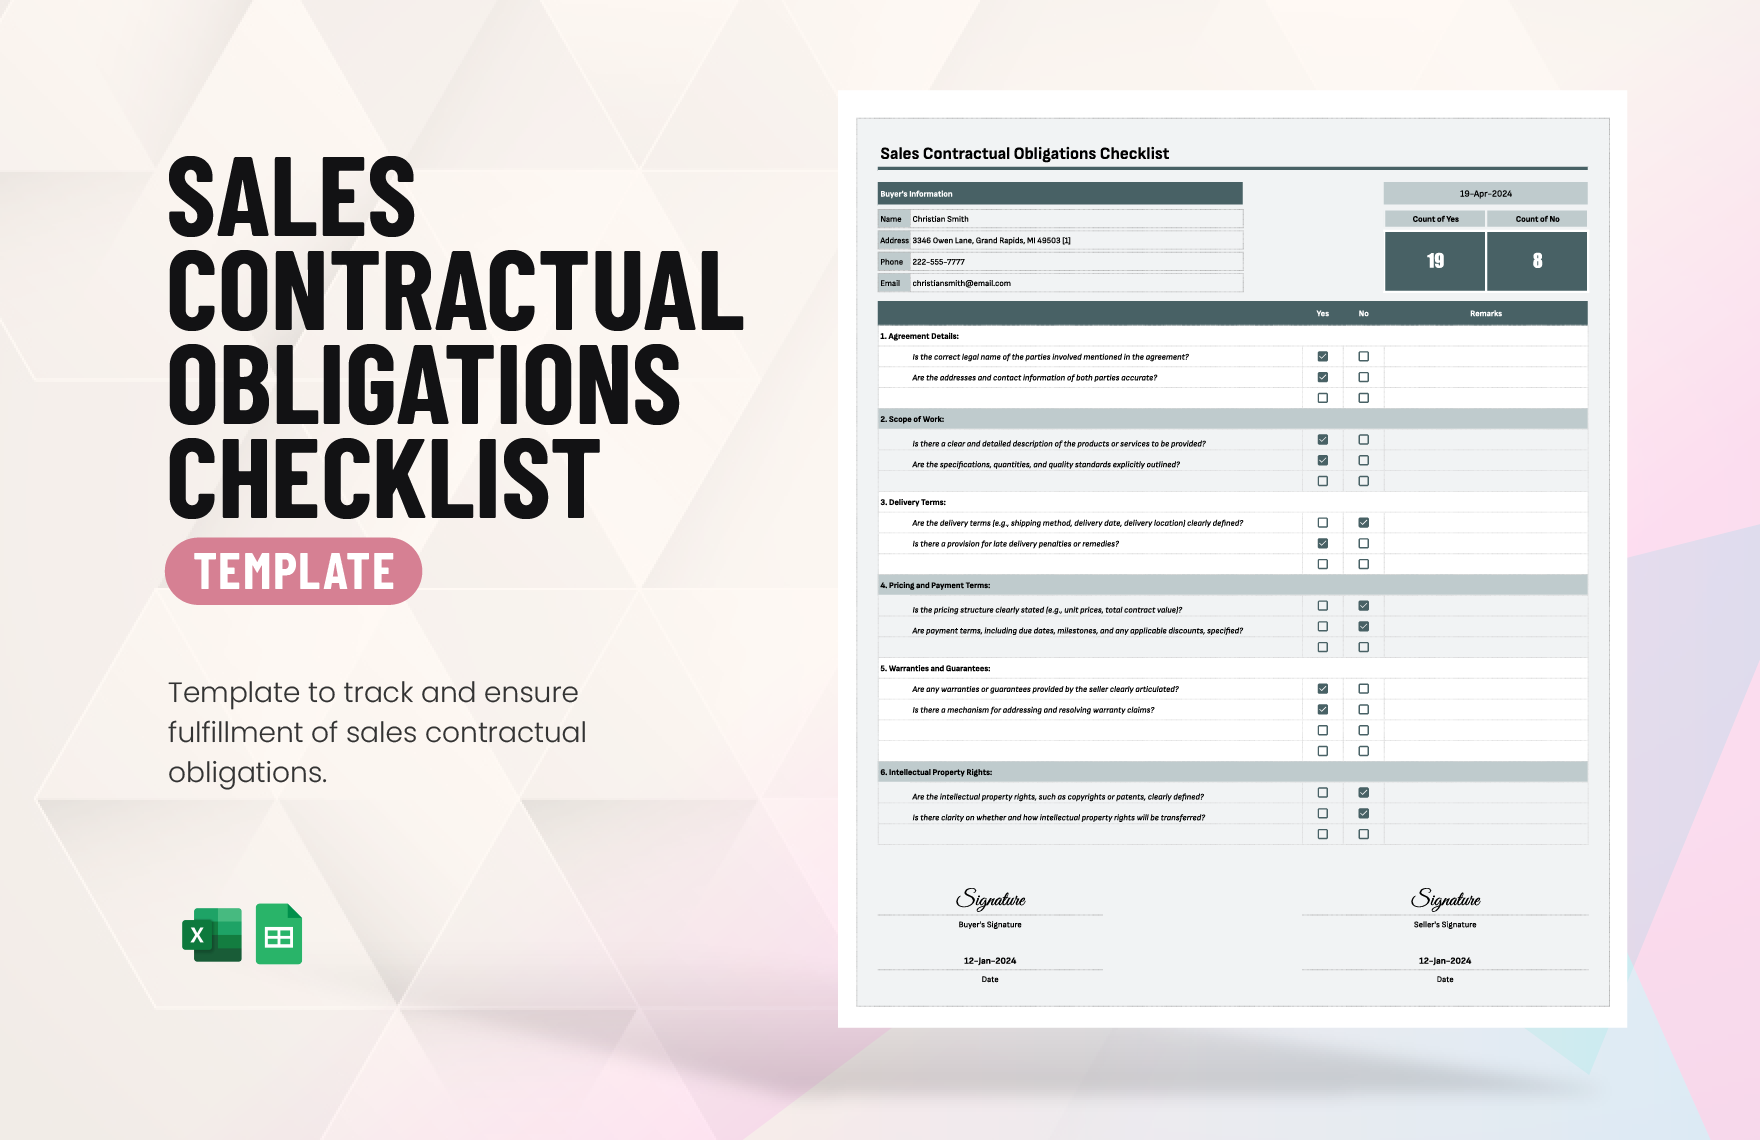 Sales Contractual Obligations Checklist Template